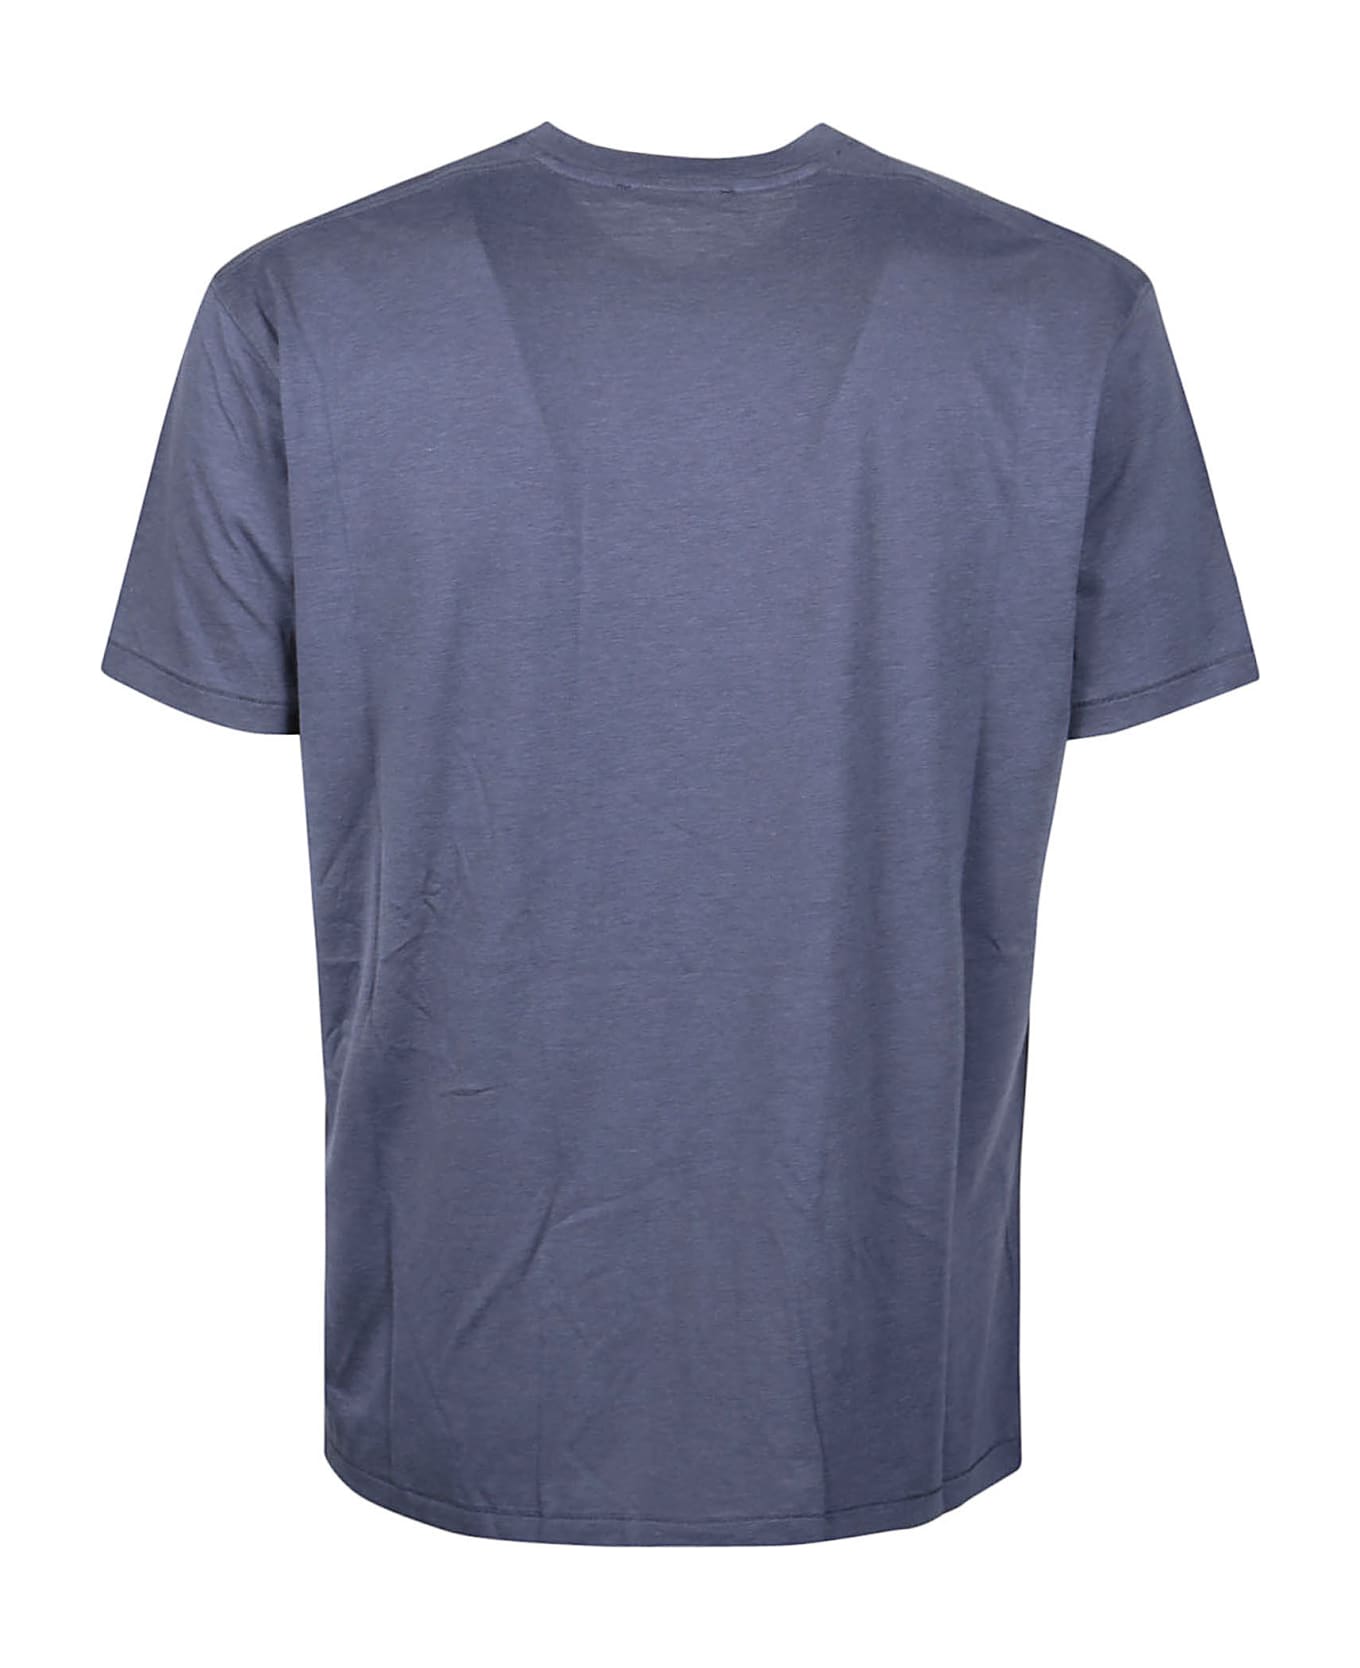 Tom Ford T-shirt - Blu